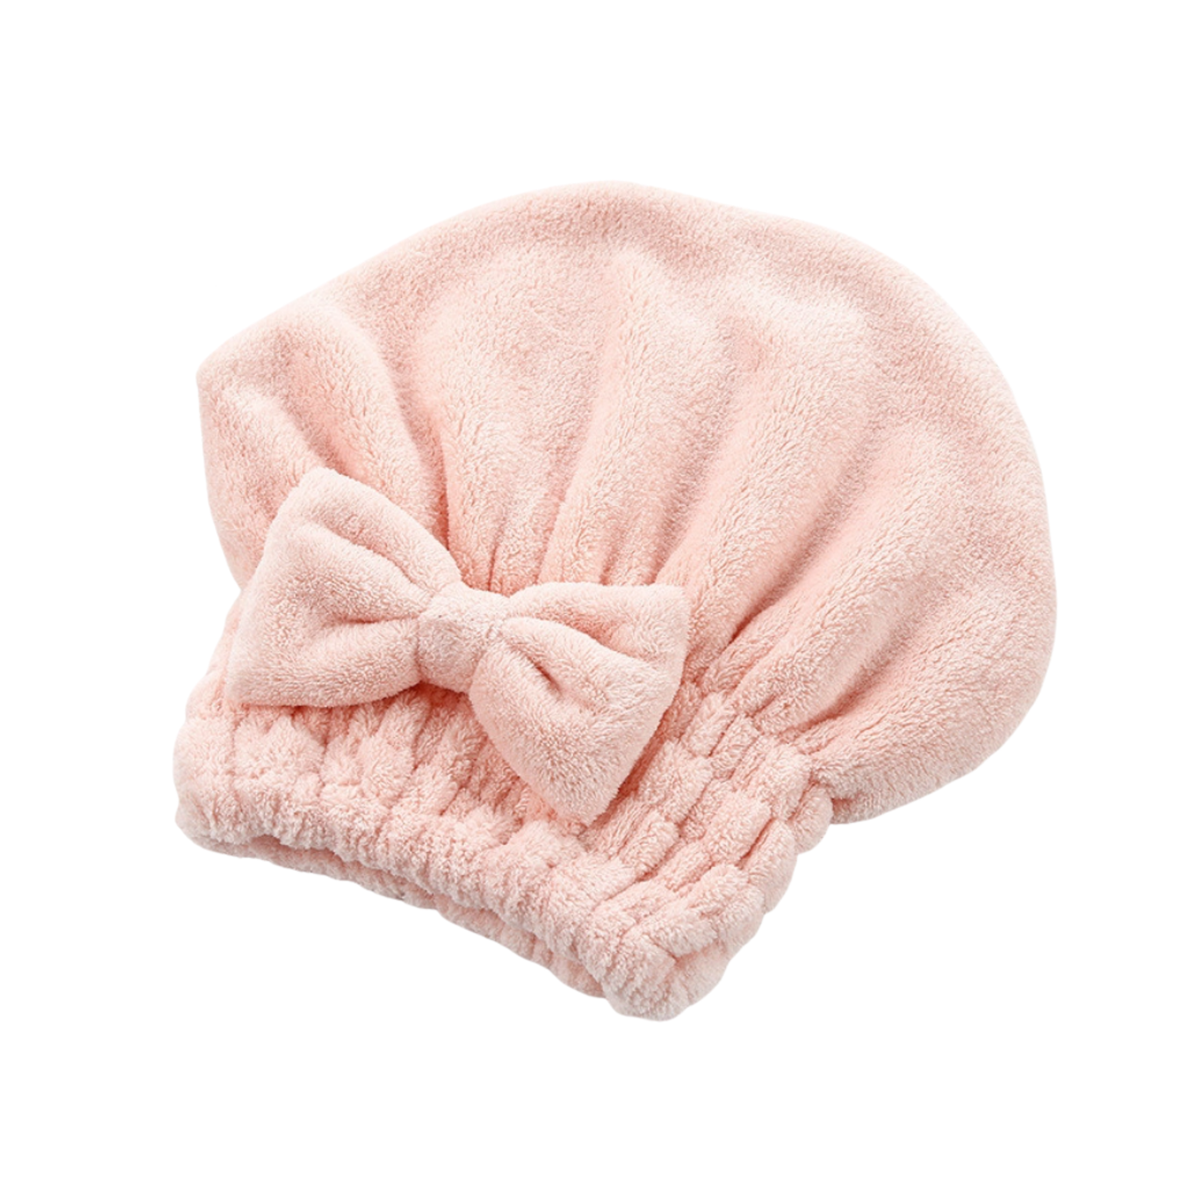 Hair Wrap Towel - Microfiber Turban Hair Drying Bonnet | Shop Today ...